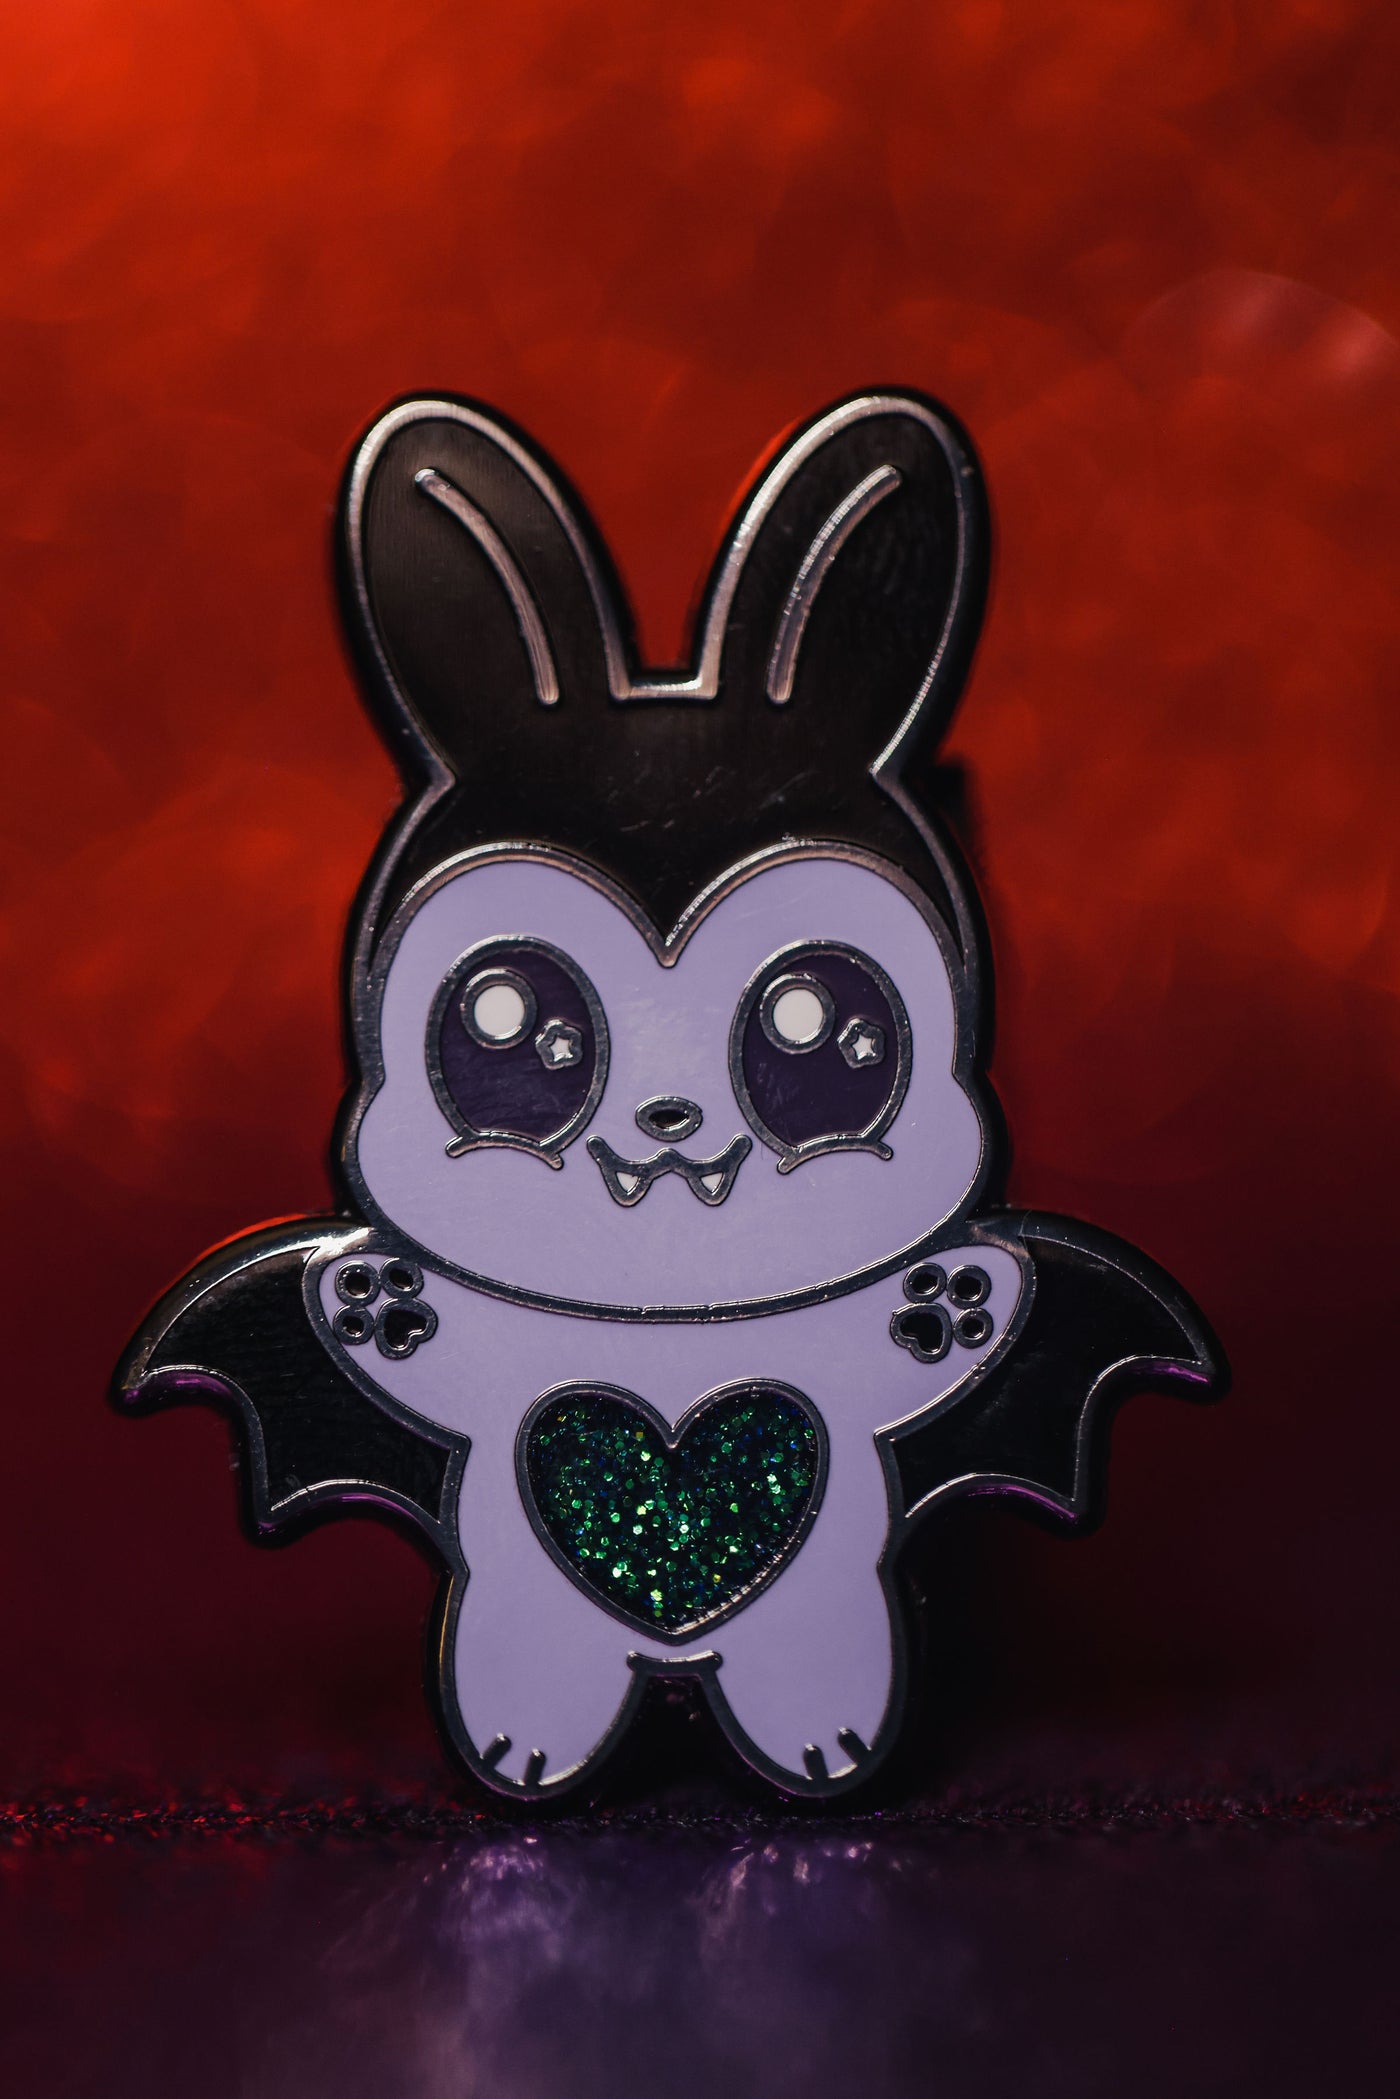 Berry Bunny Enamel Pin - Spooky and Kawaii Bunnies Collection